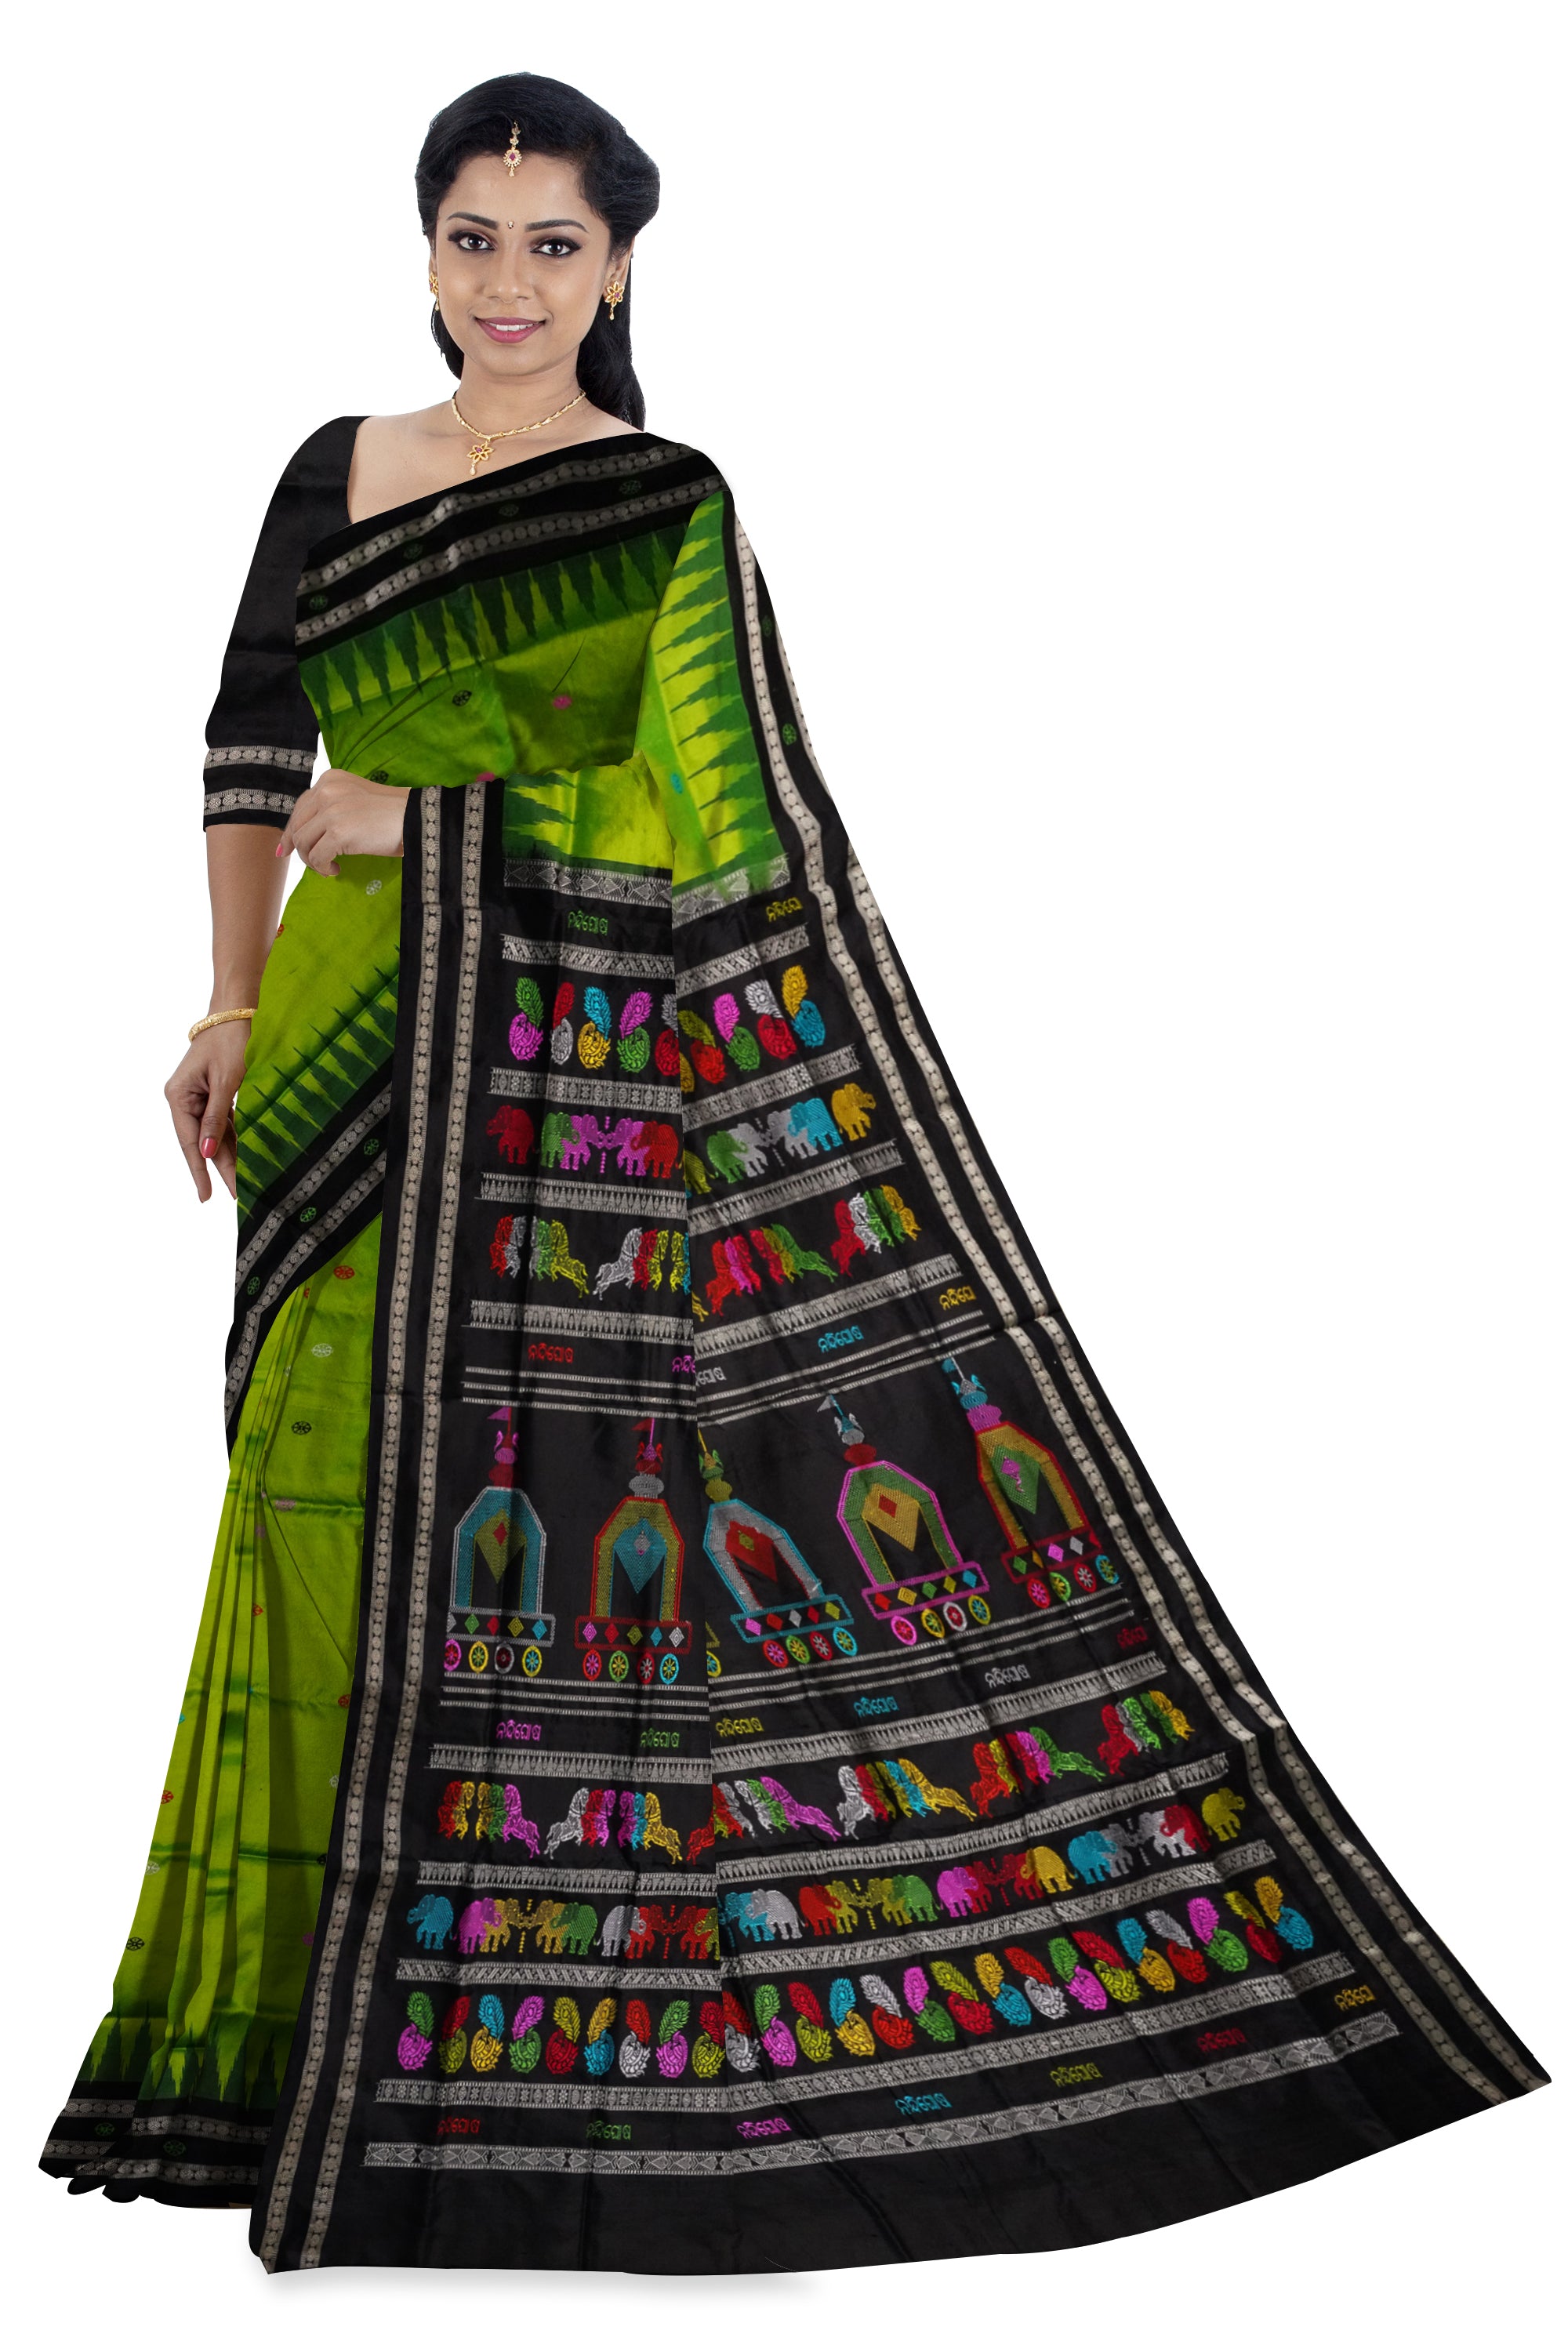 Lime-tree green and Black color Dolabedi pure pata saree. - Koshali Arts & Crafts Enterprise